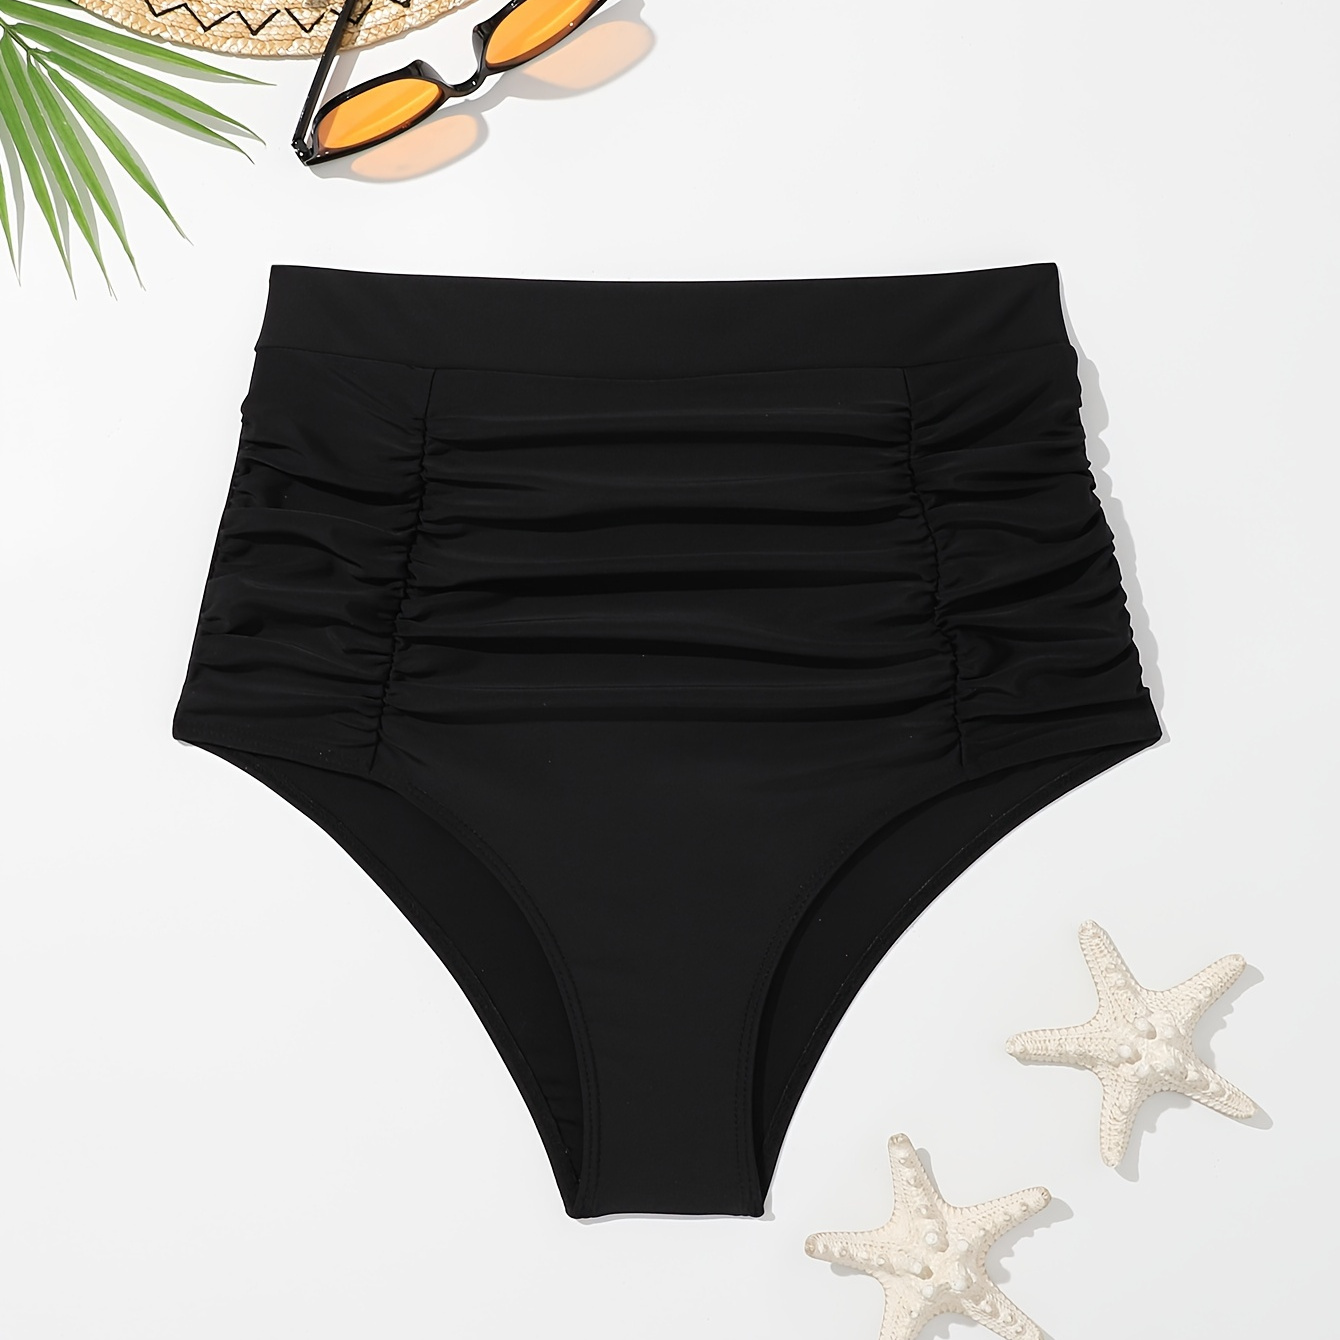 

Women's High-waisted Tummy Control Bikini Bottoms, Fashion Solid Color Ruched Swim Briefs, Quick-dry Breathable Fabric, Beachwear, Poolside Essential, Summer Swimwear